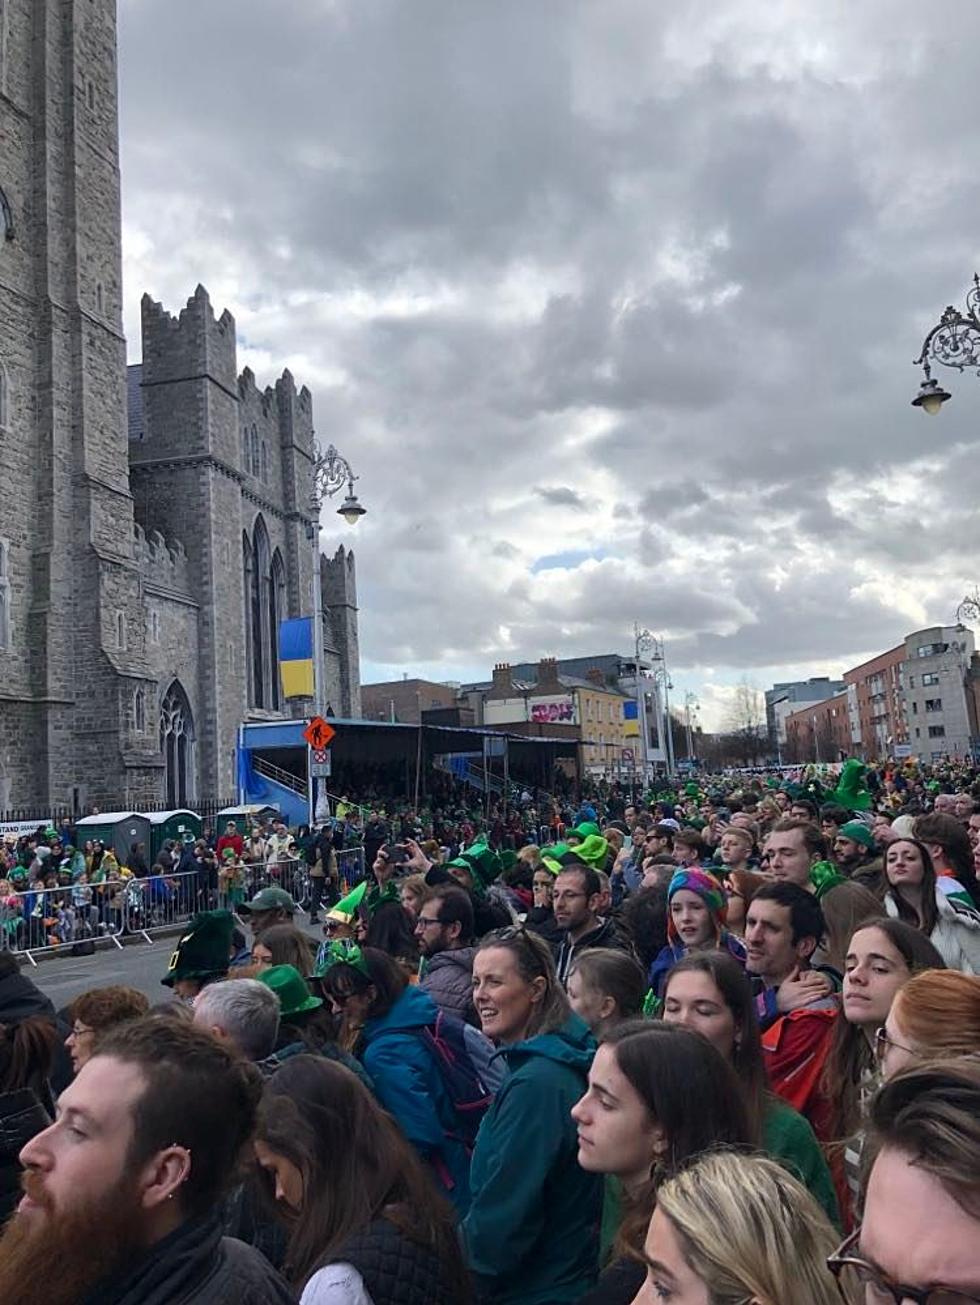 Last Year I Celebrated St. Patrick's Day in Ireland